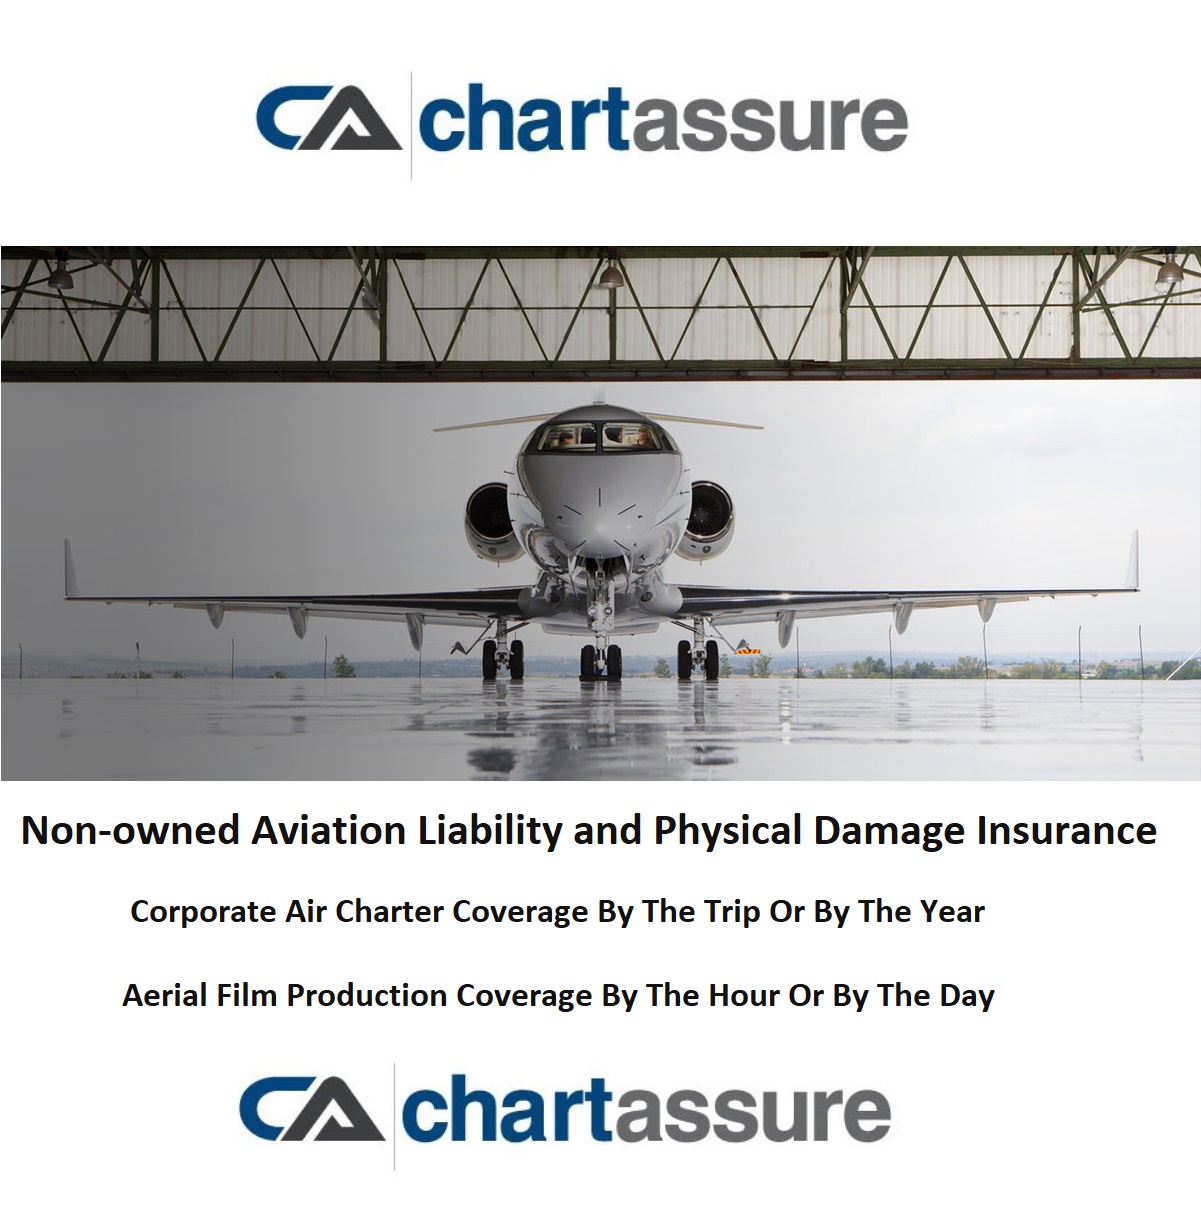 Chartassure Non-owned Aviation Liability